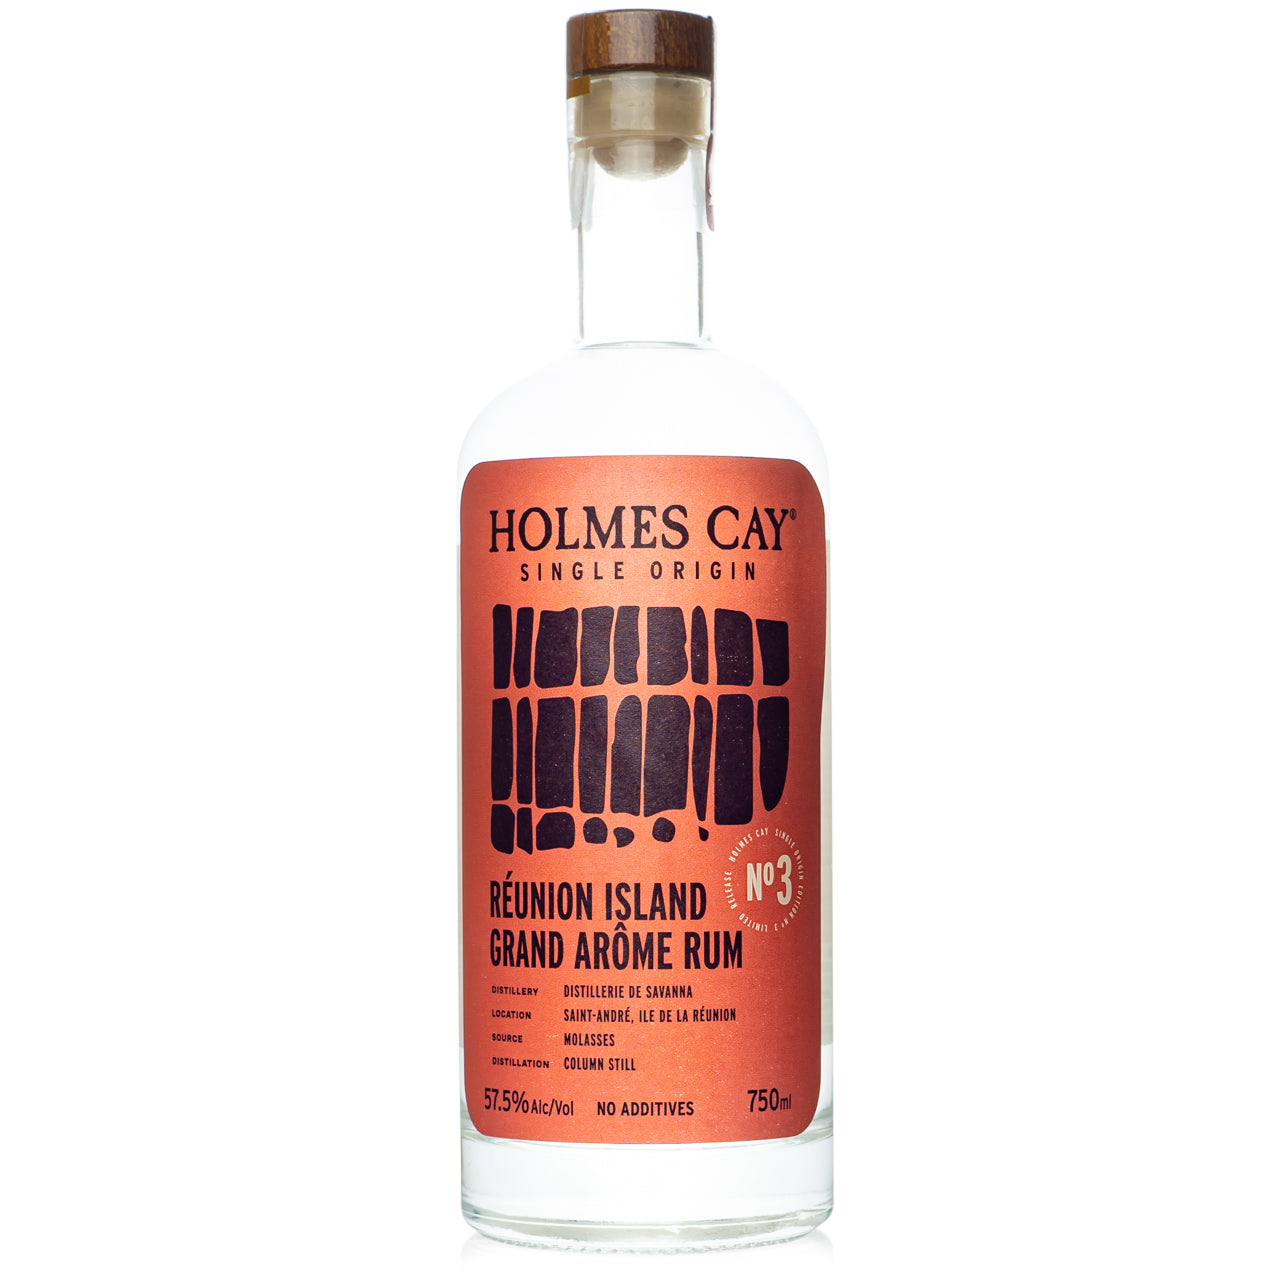 Holmes Cay Single Origin Réunion Island Grand Arôme Rum